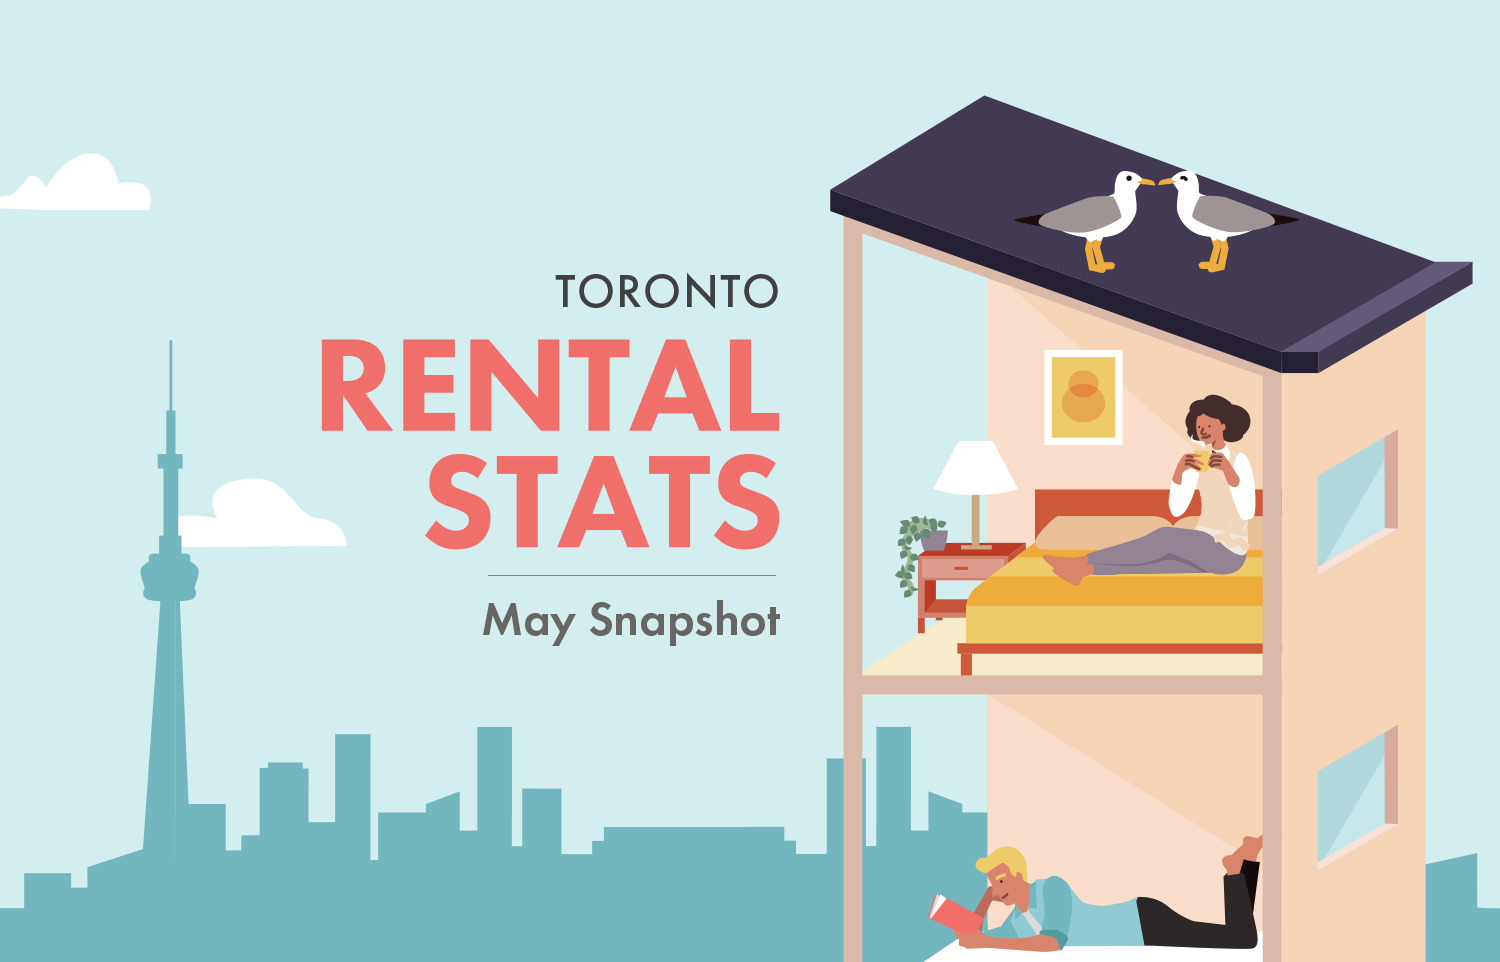 Toronto Rental Stats – May 2019 Snapshot